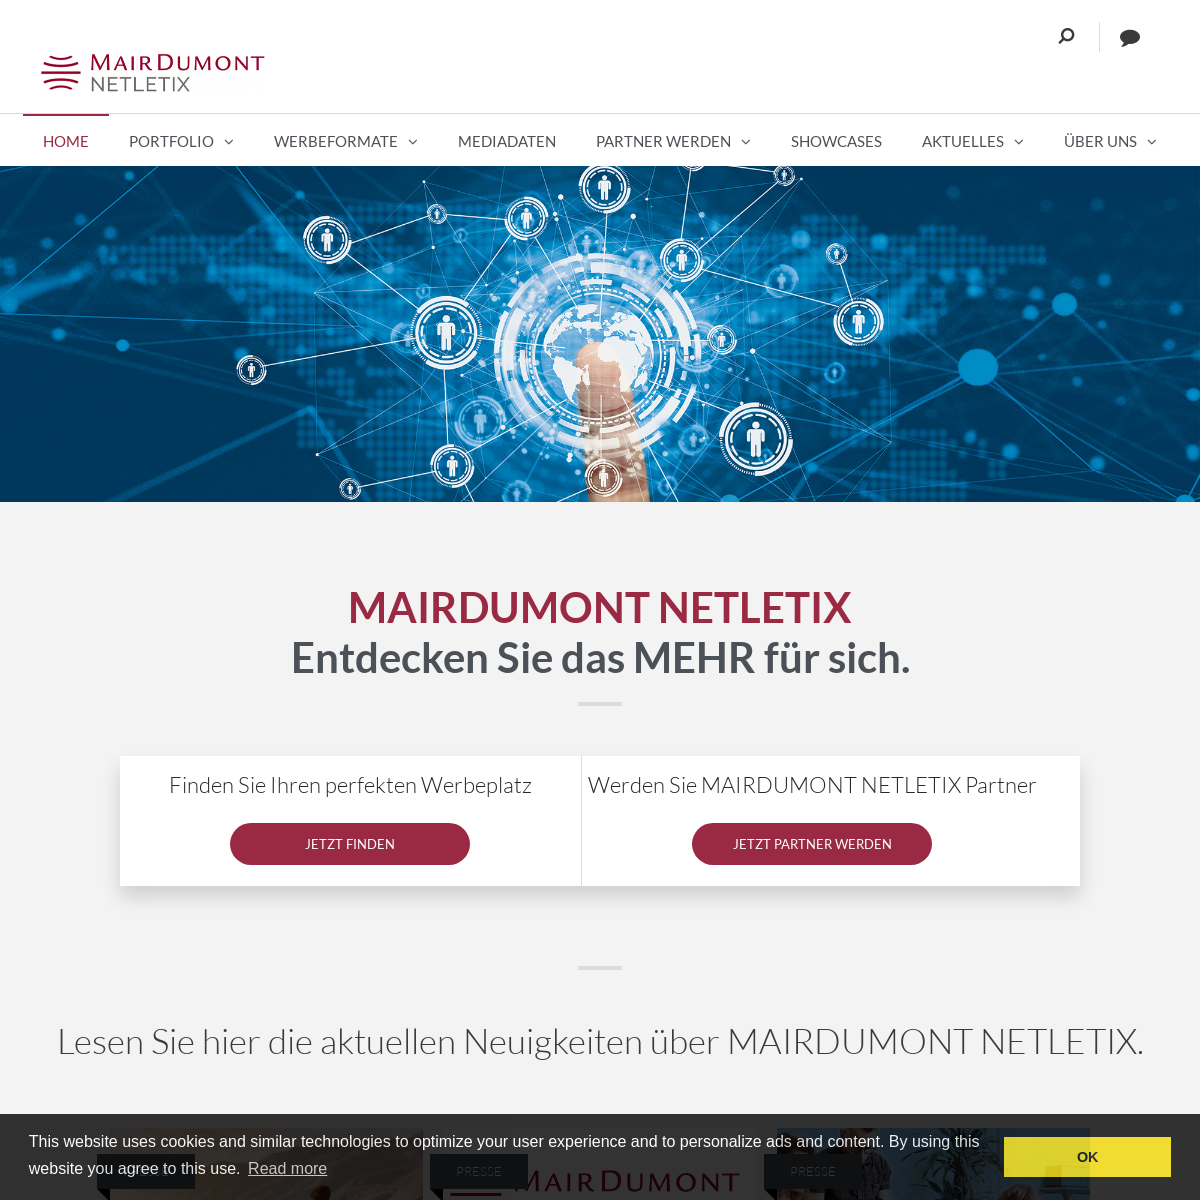 A complete backup of mairdumont-netletix.com